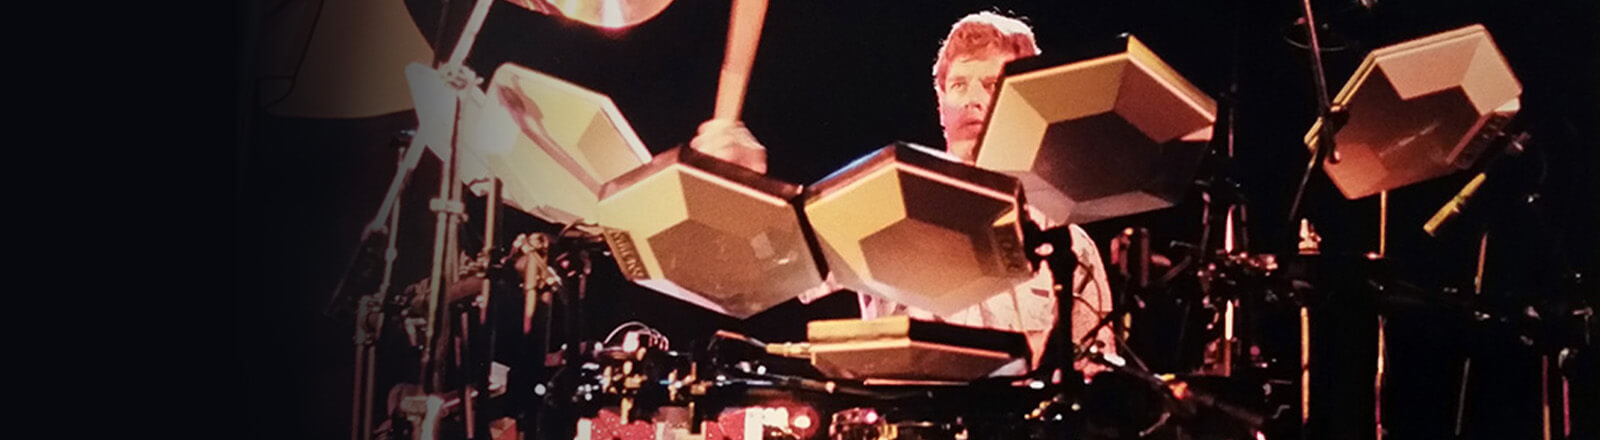 man playing Simmons vintage drum kits